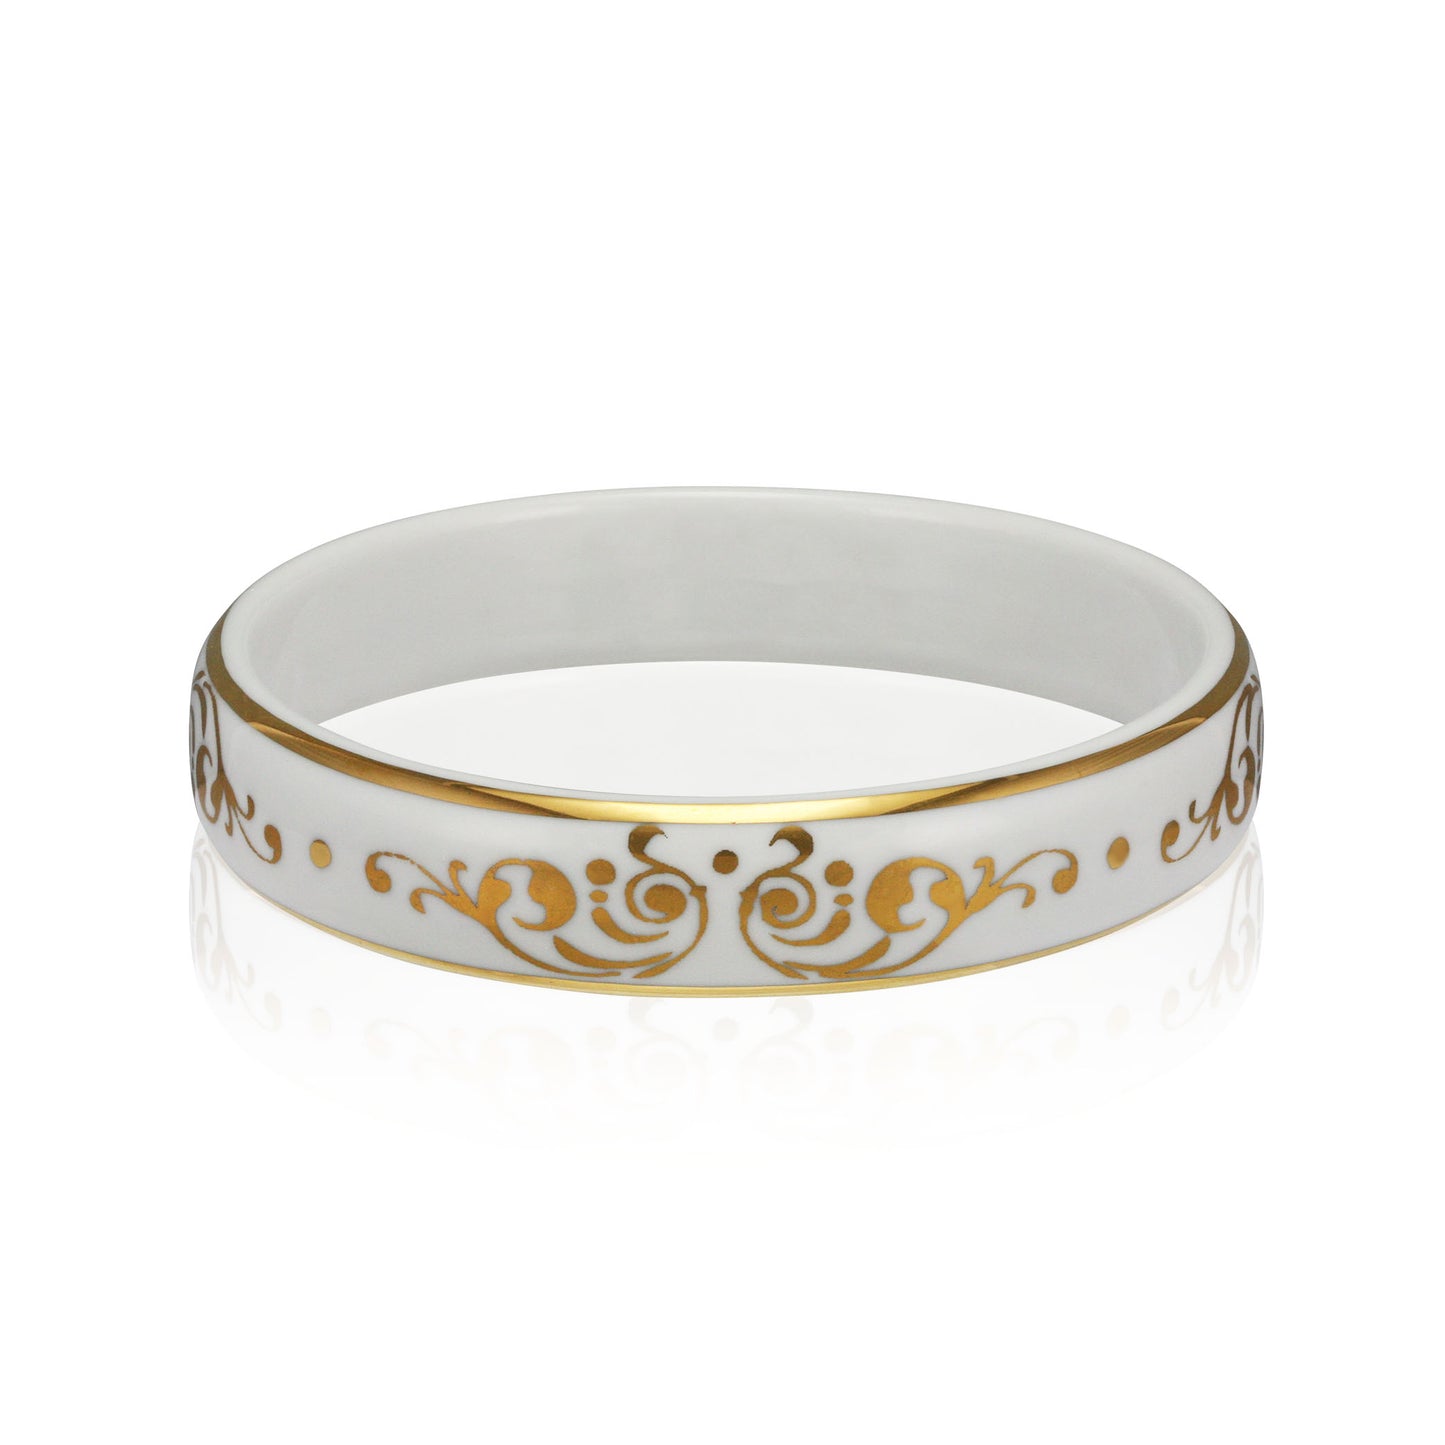 BAROQUE white gold plated fine porcelain bracelet